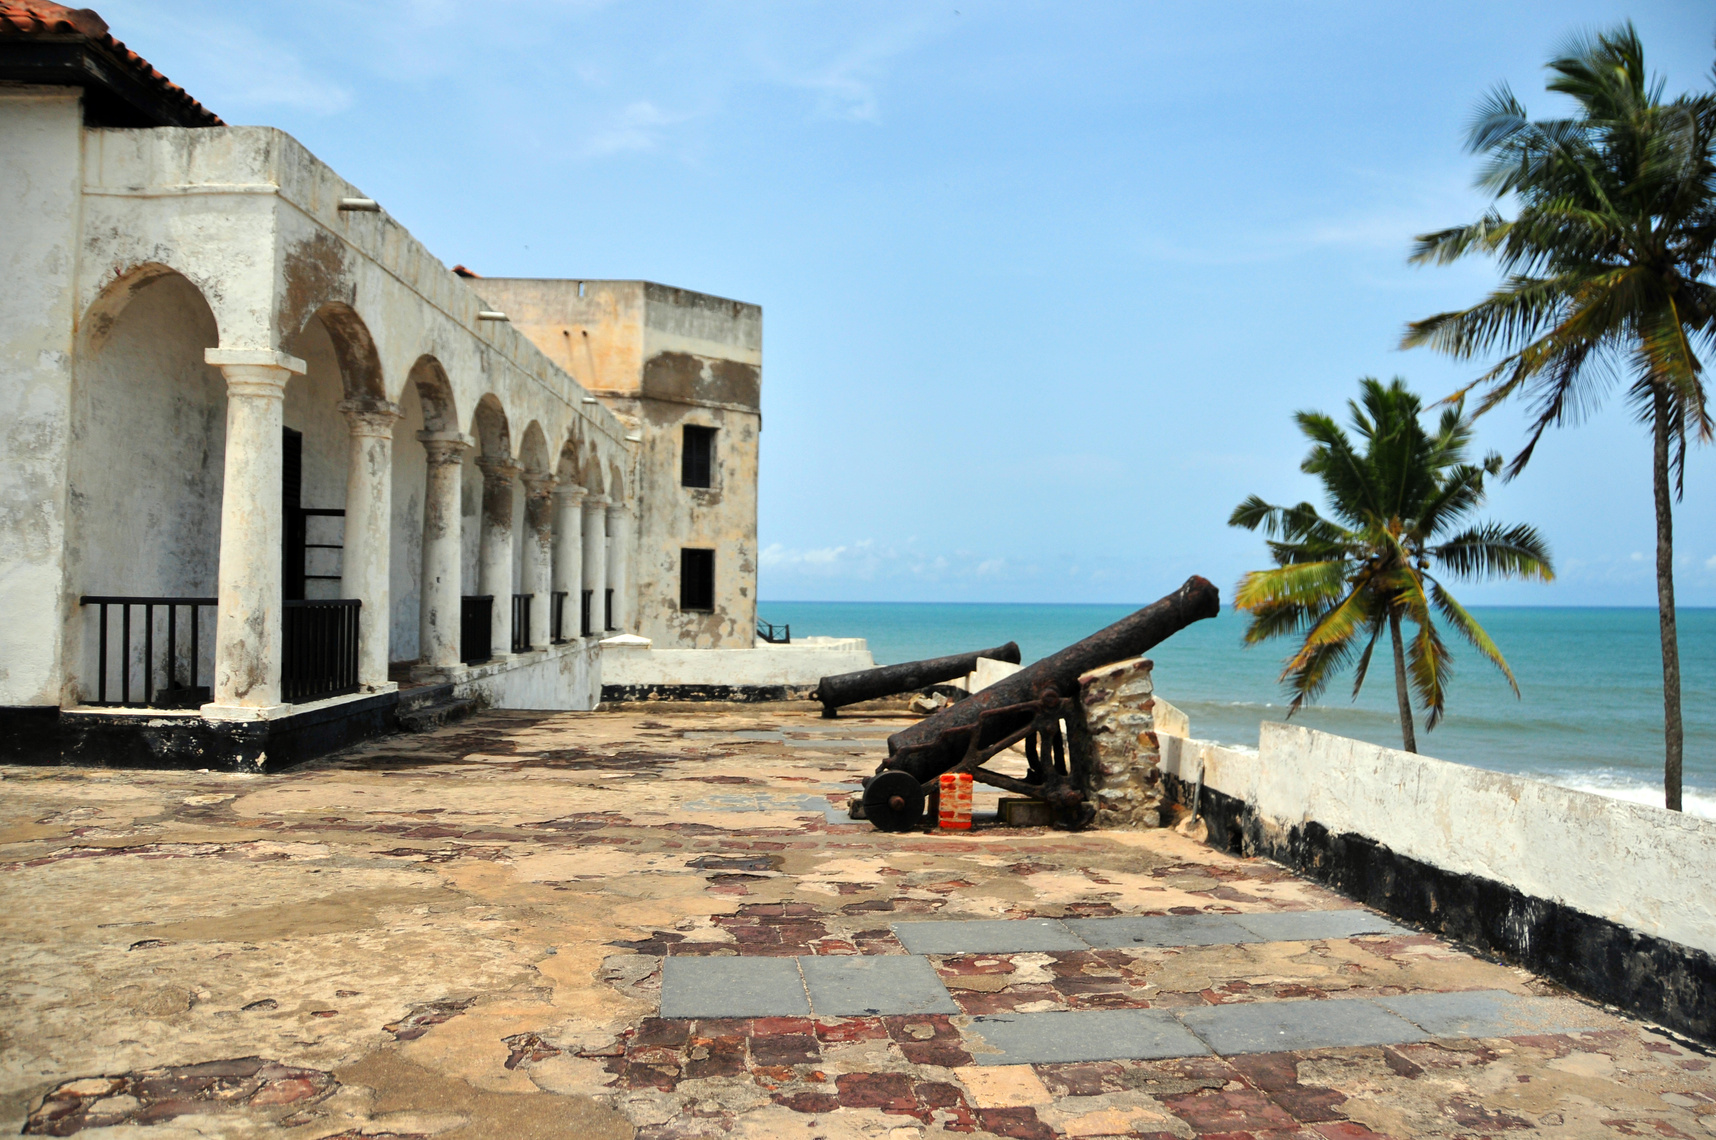 Ghana, Elmina castle